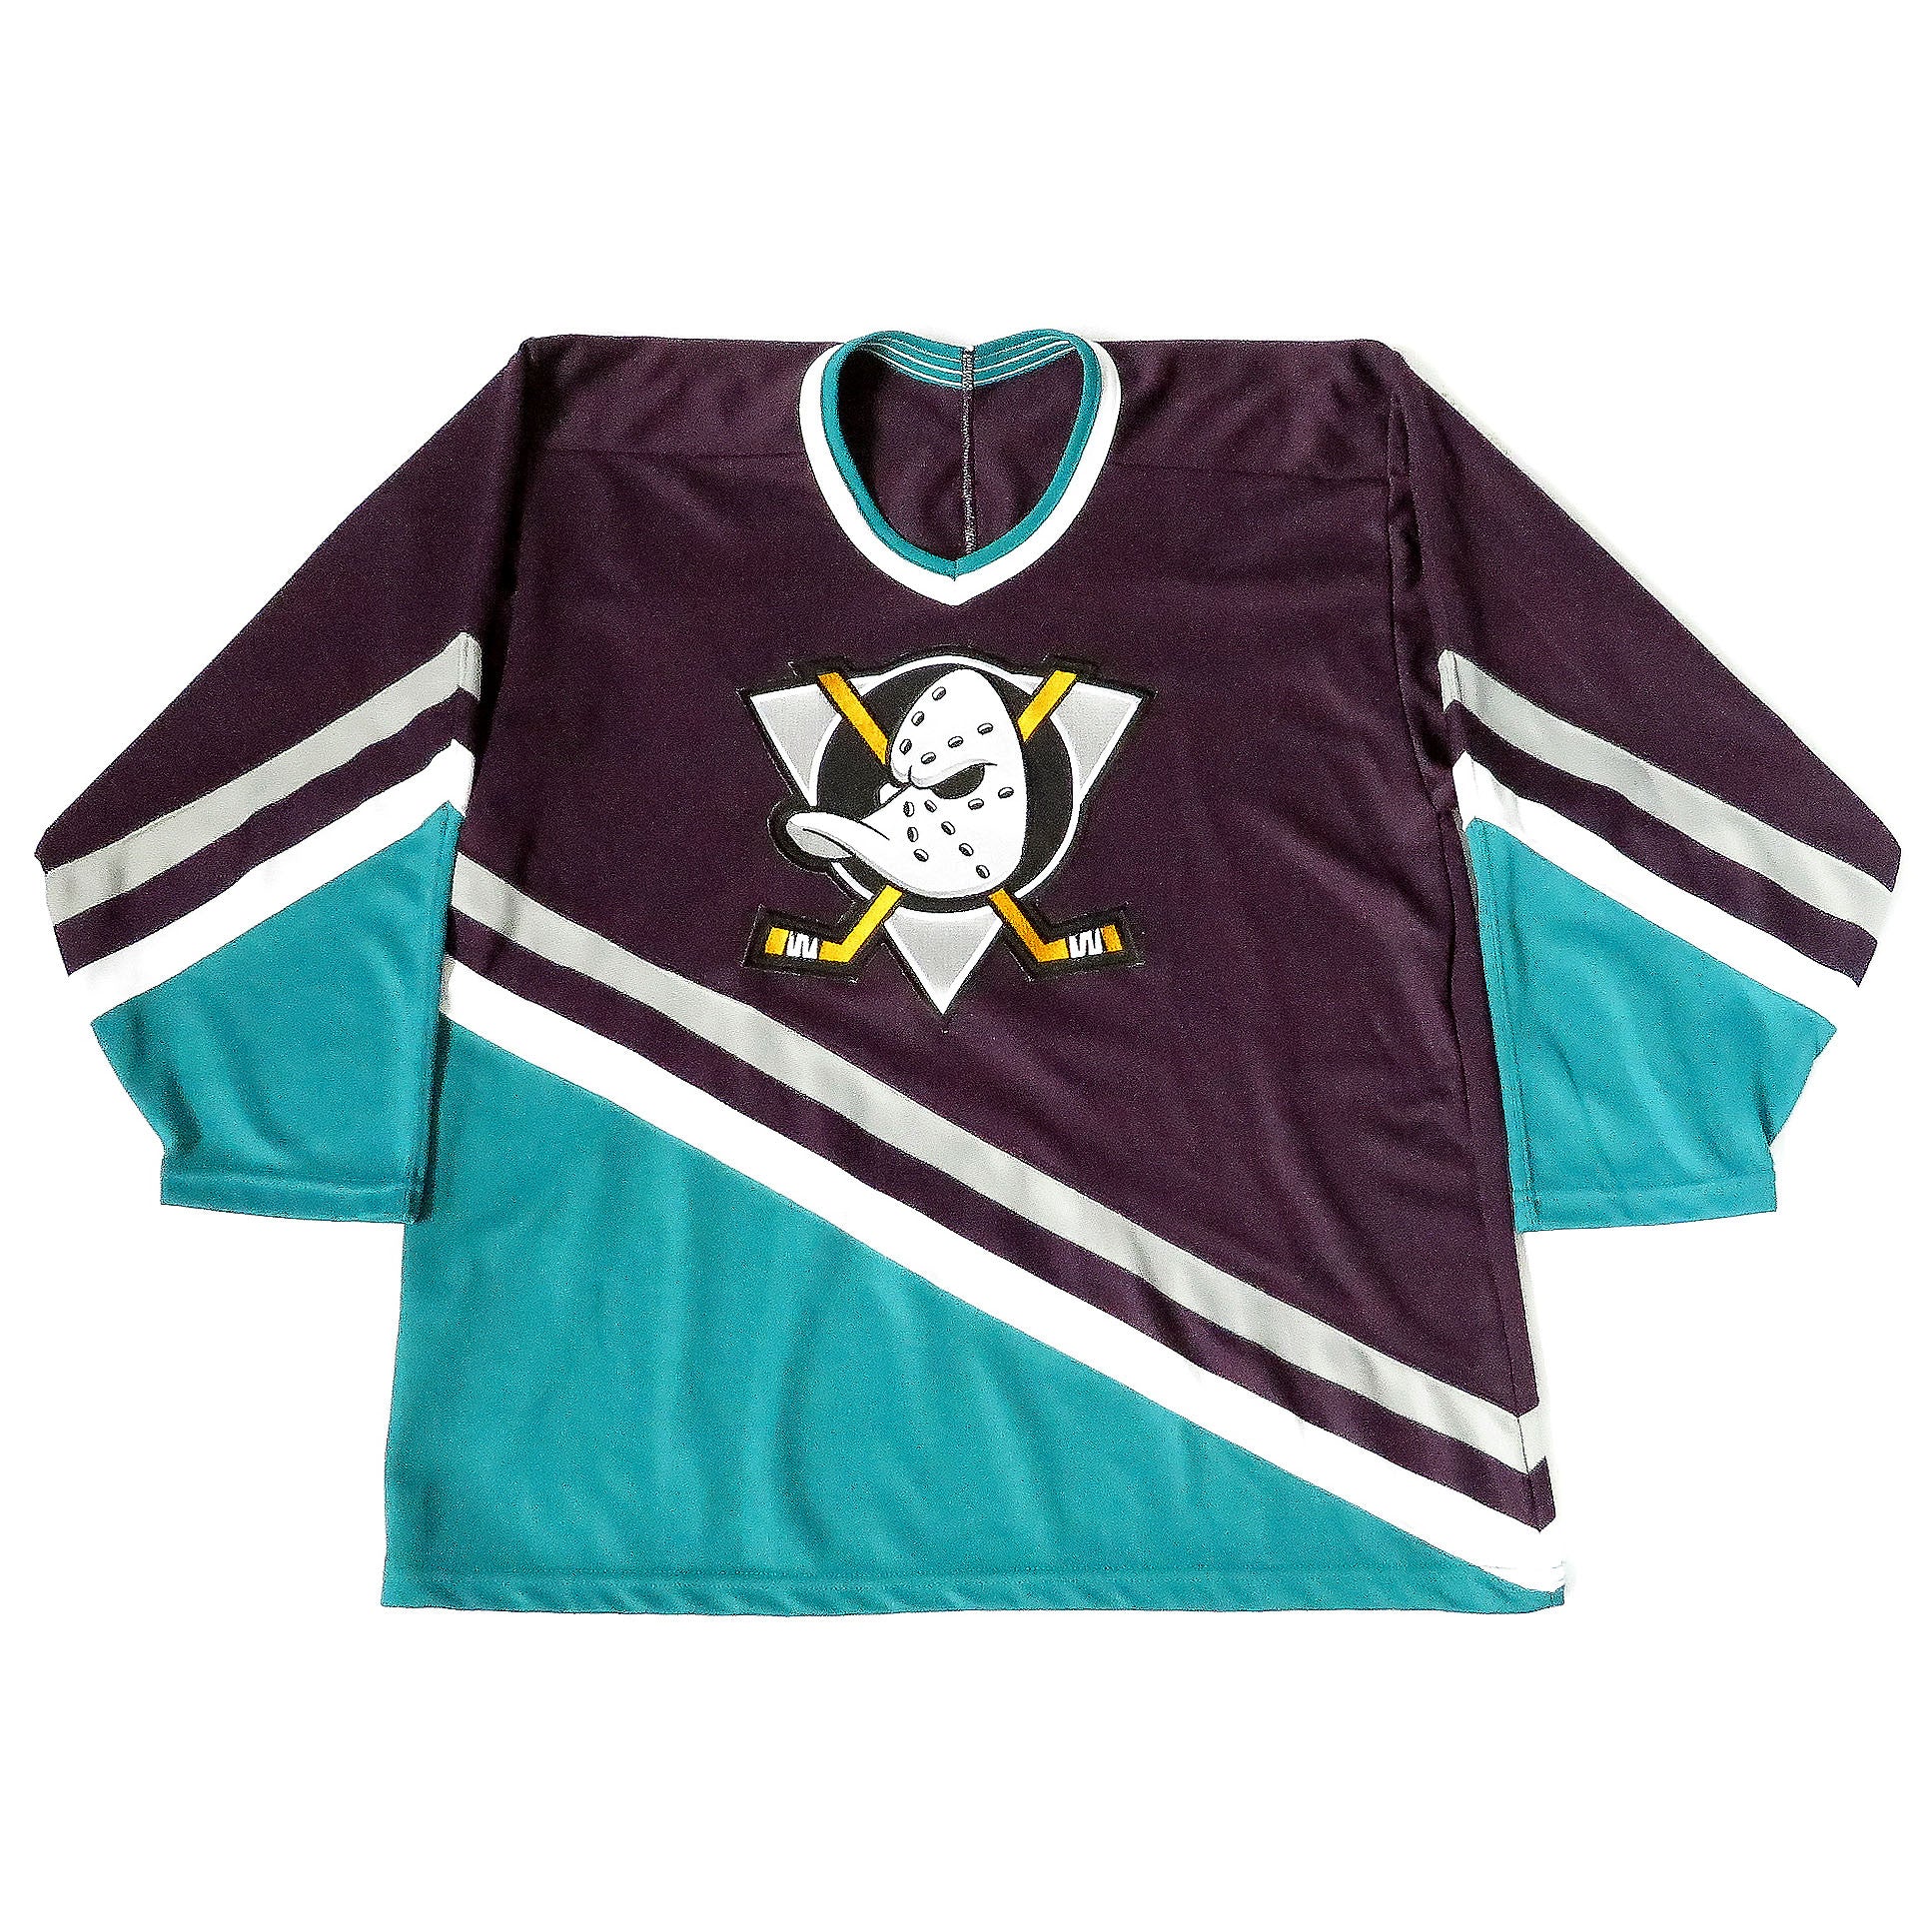 Vintage Mighty Ducks Hockey Jersey Sz L